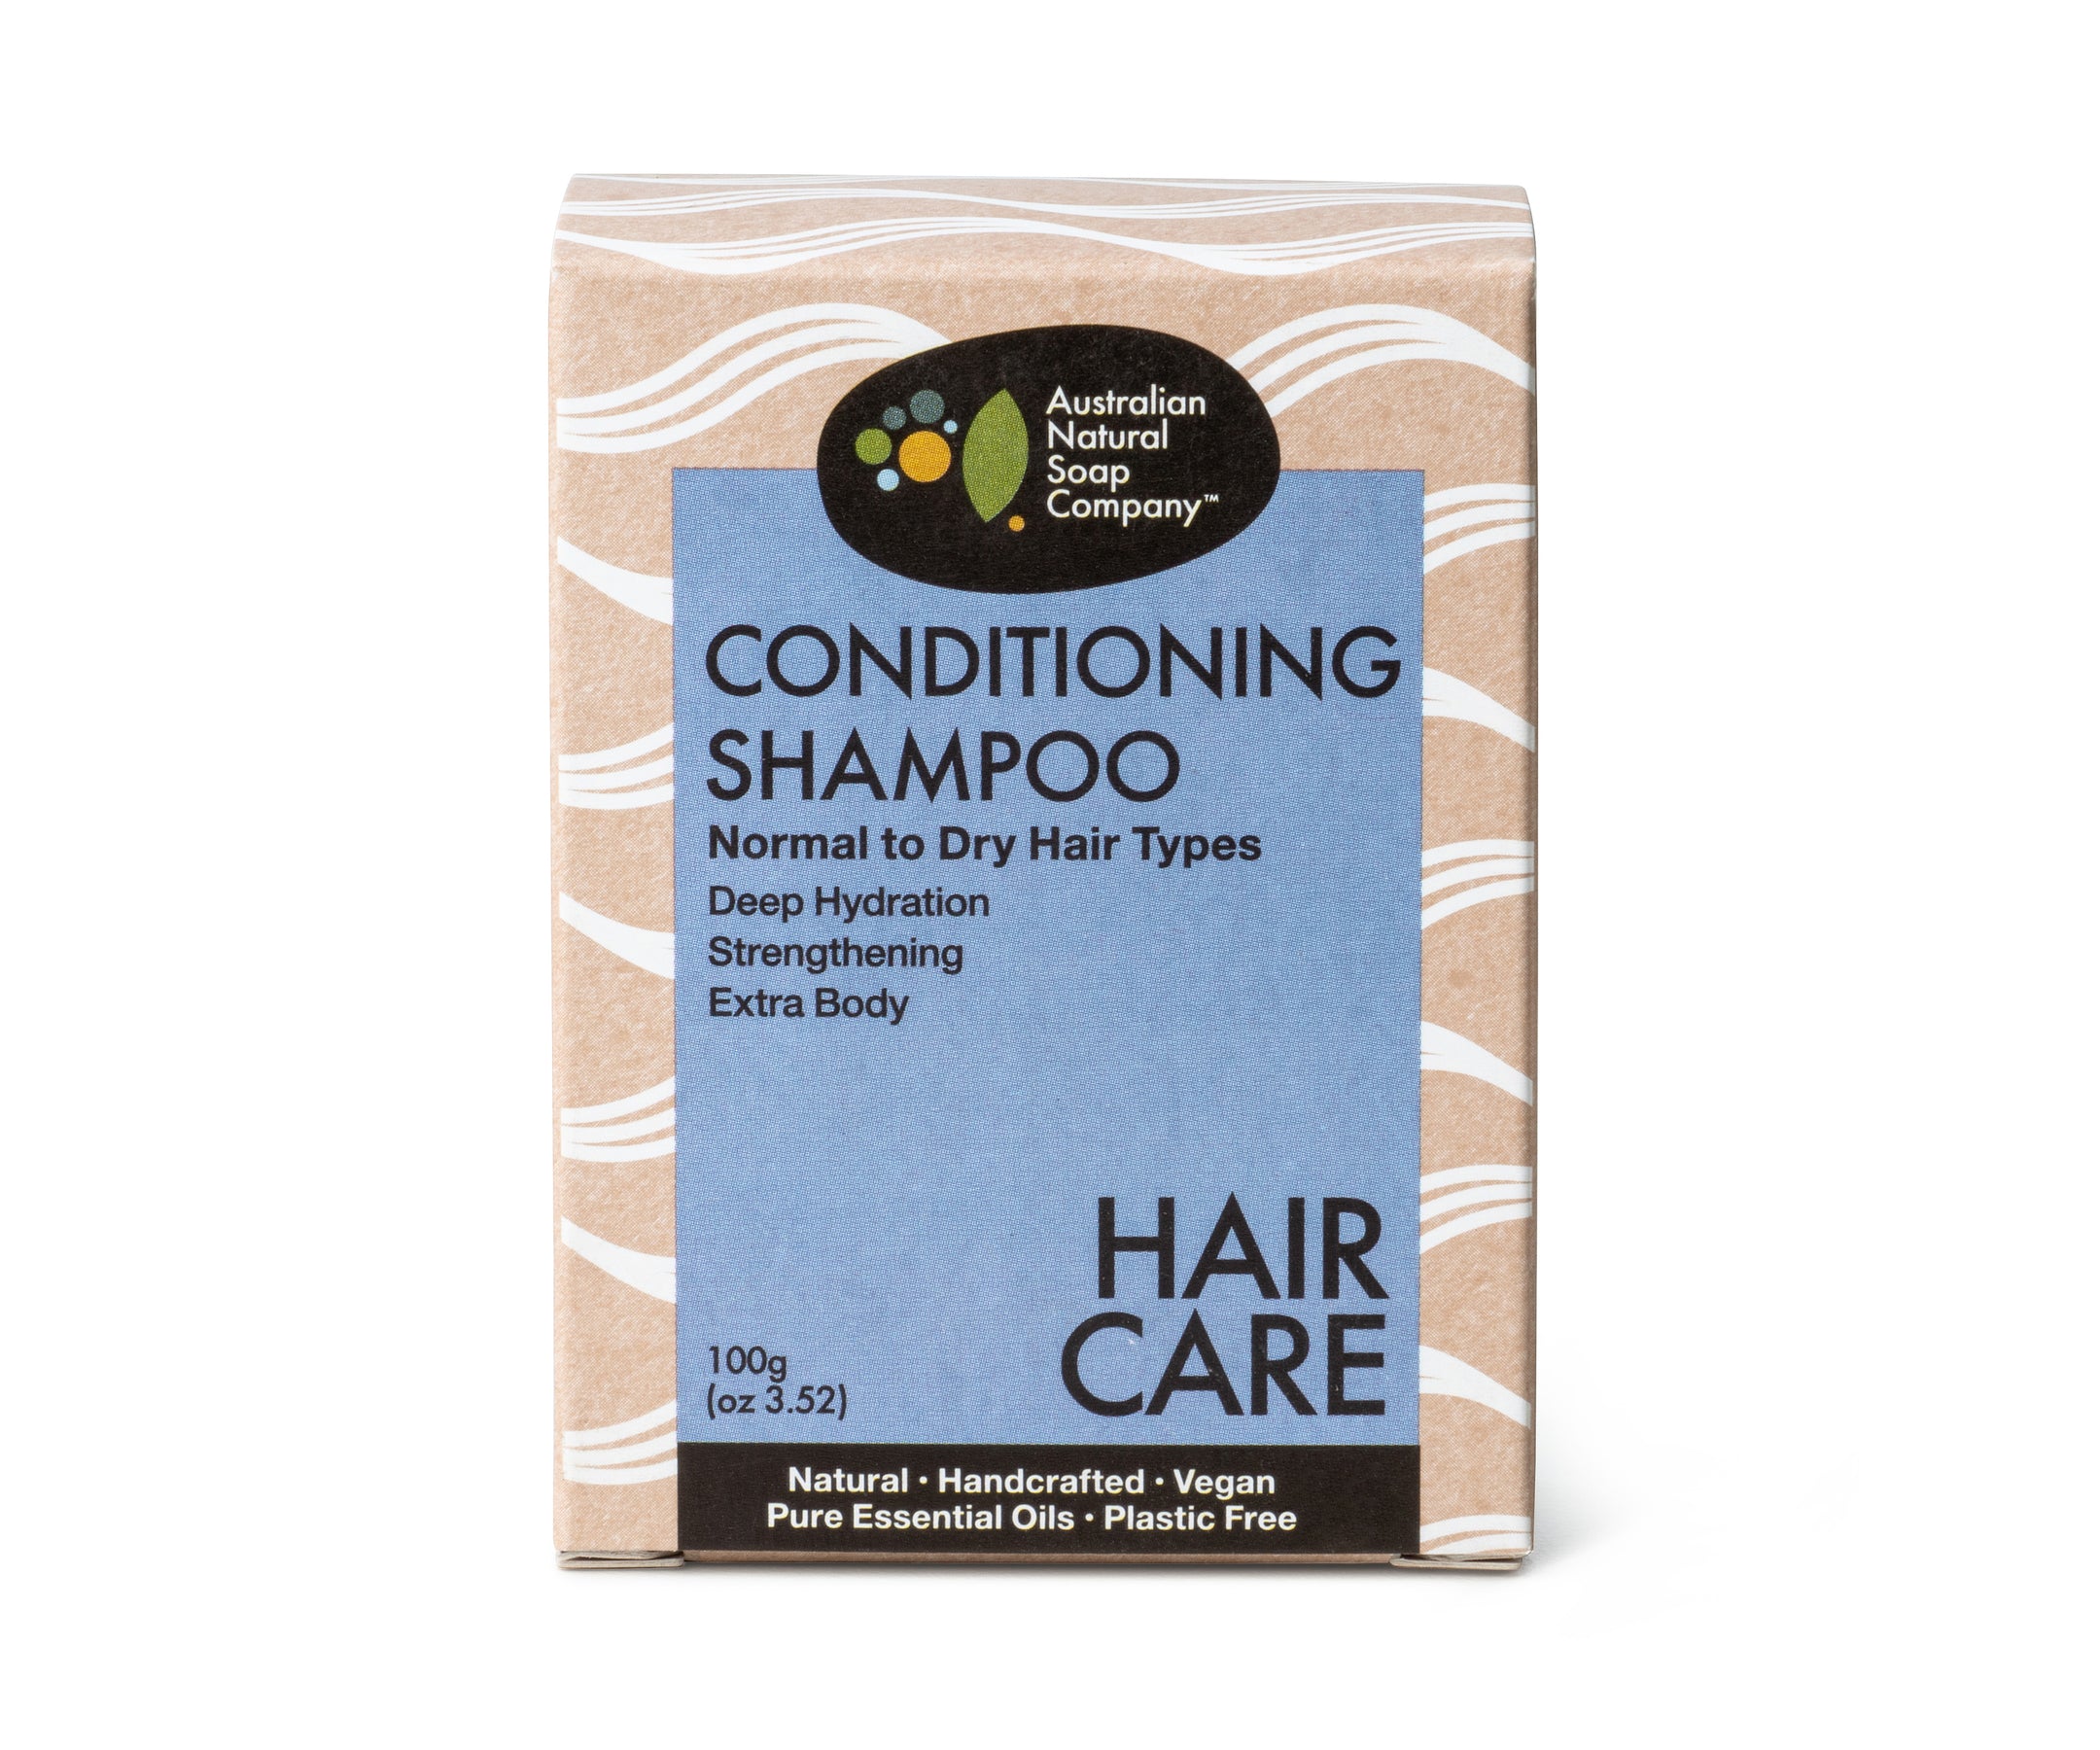 Australian Natural Soap Company conditioning shampoo bar front of box